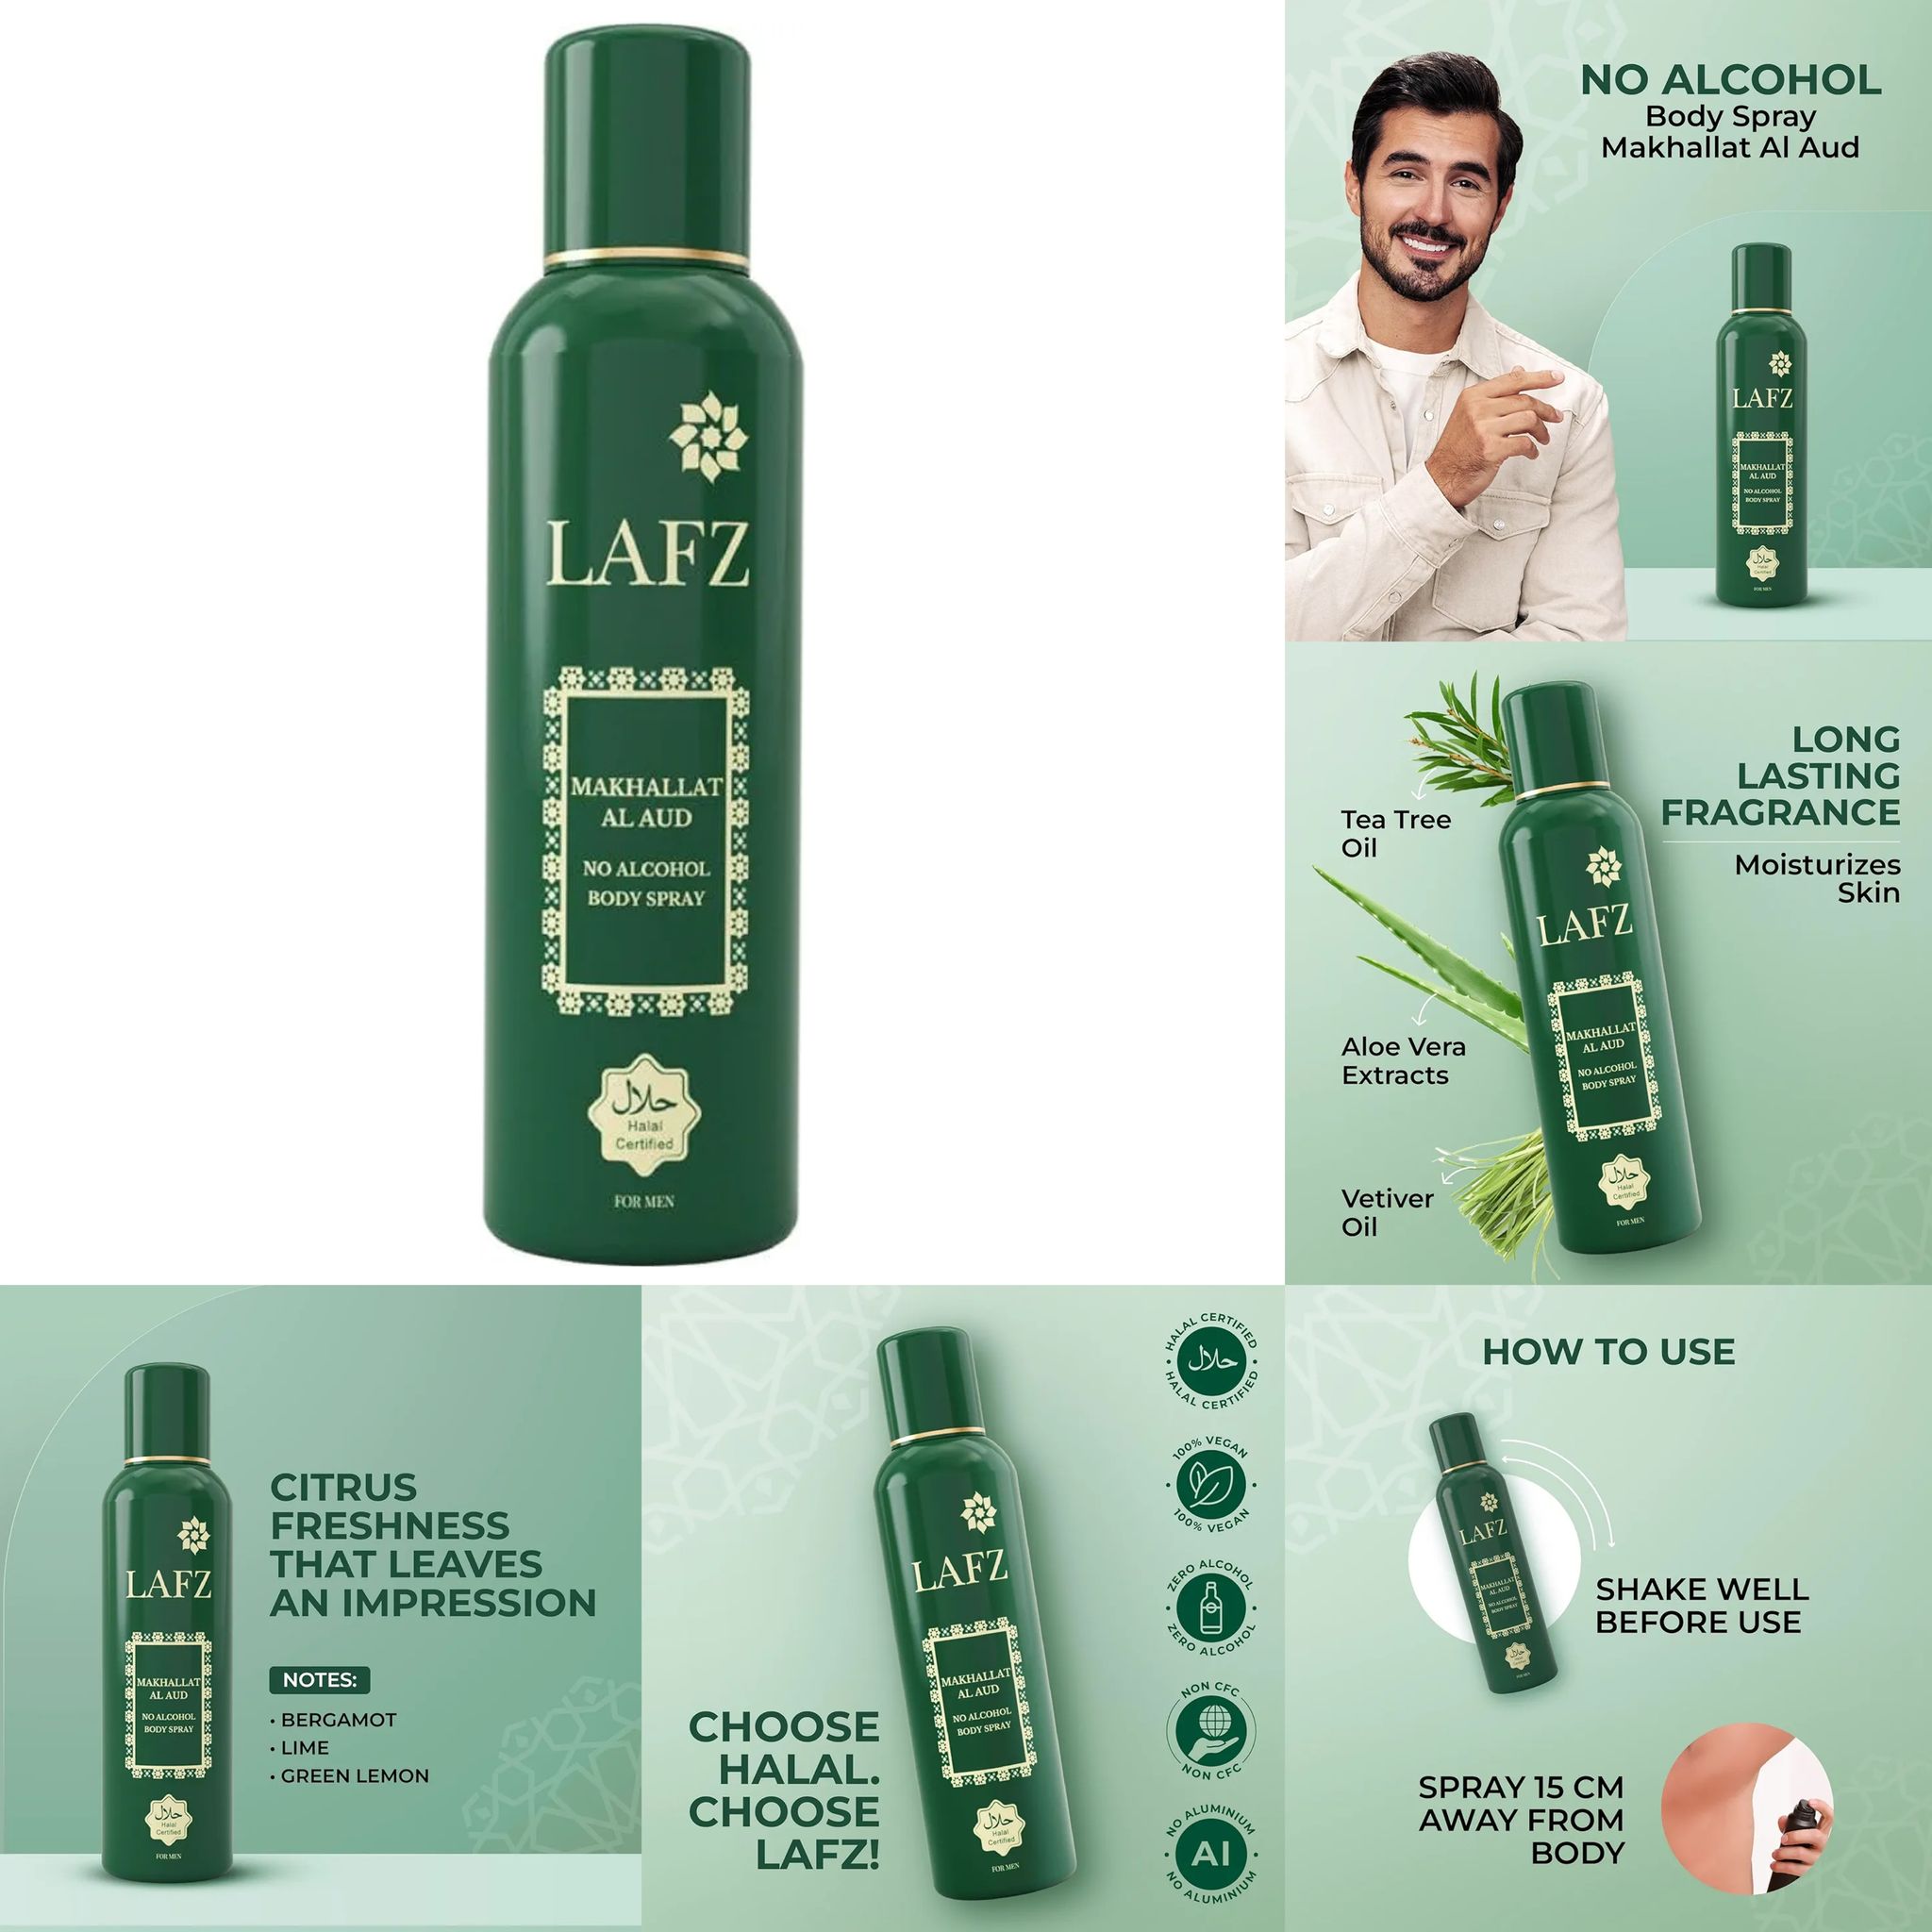 LAFZ Makhallat Al Aud Body Spray, No Alcohol Deodorant - For Men, 150 ml